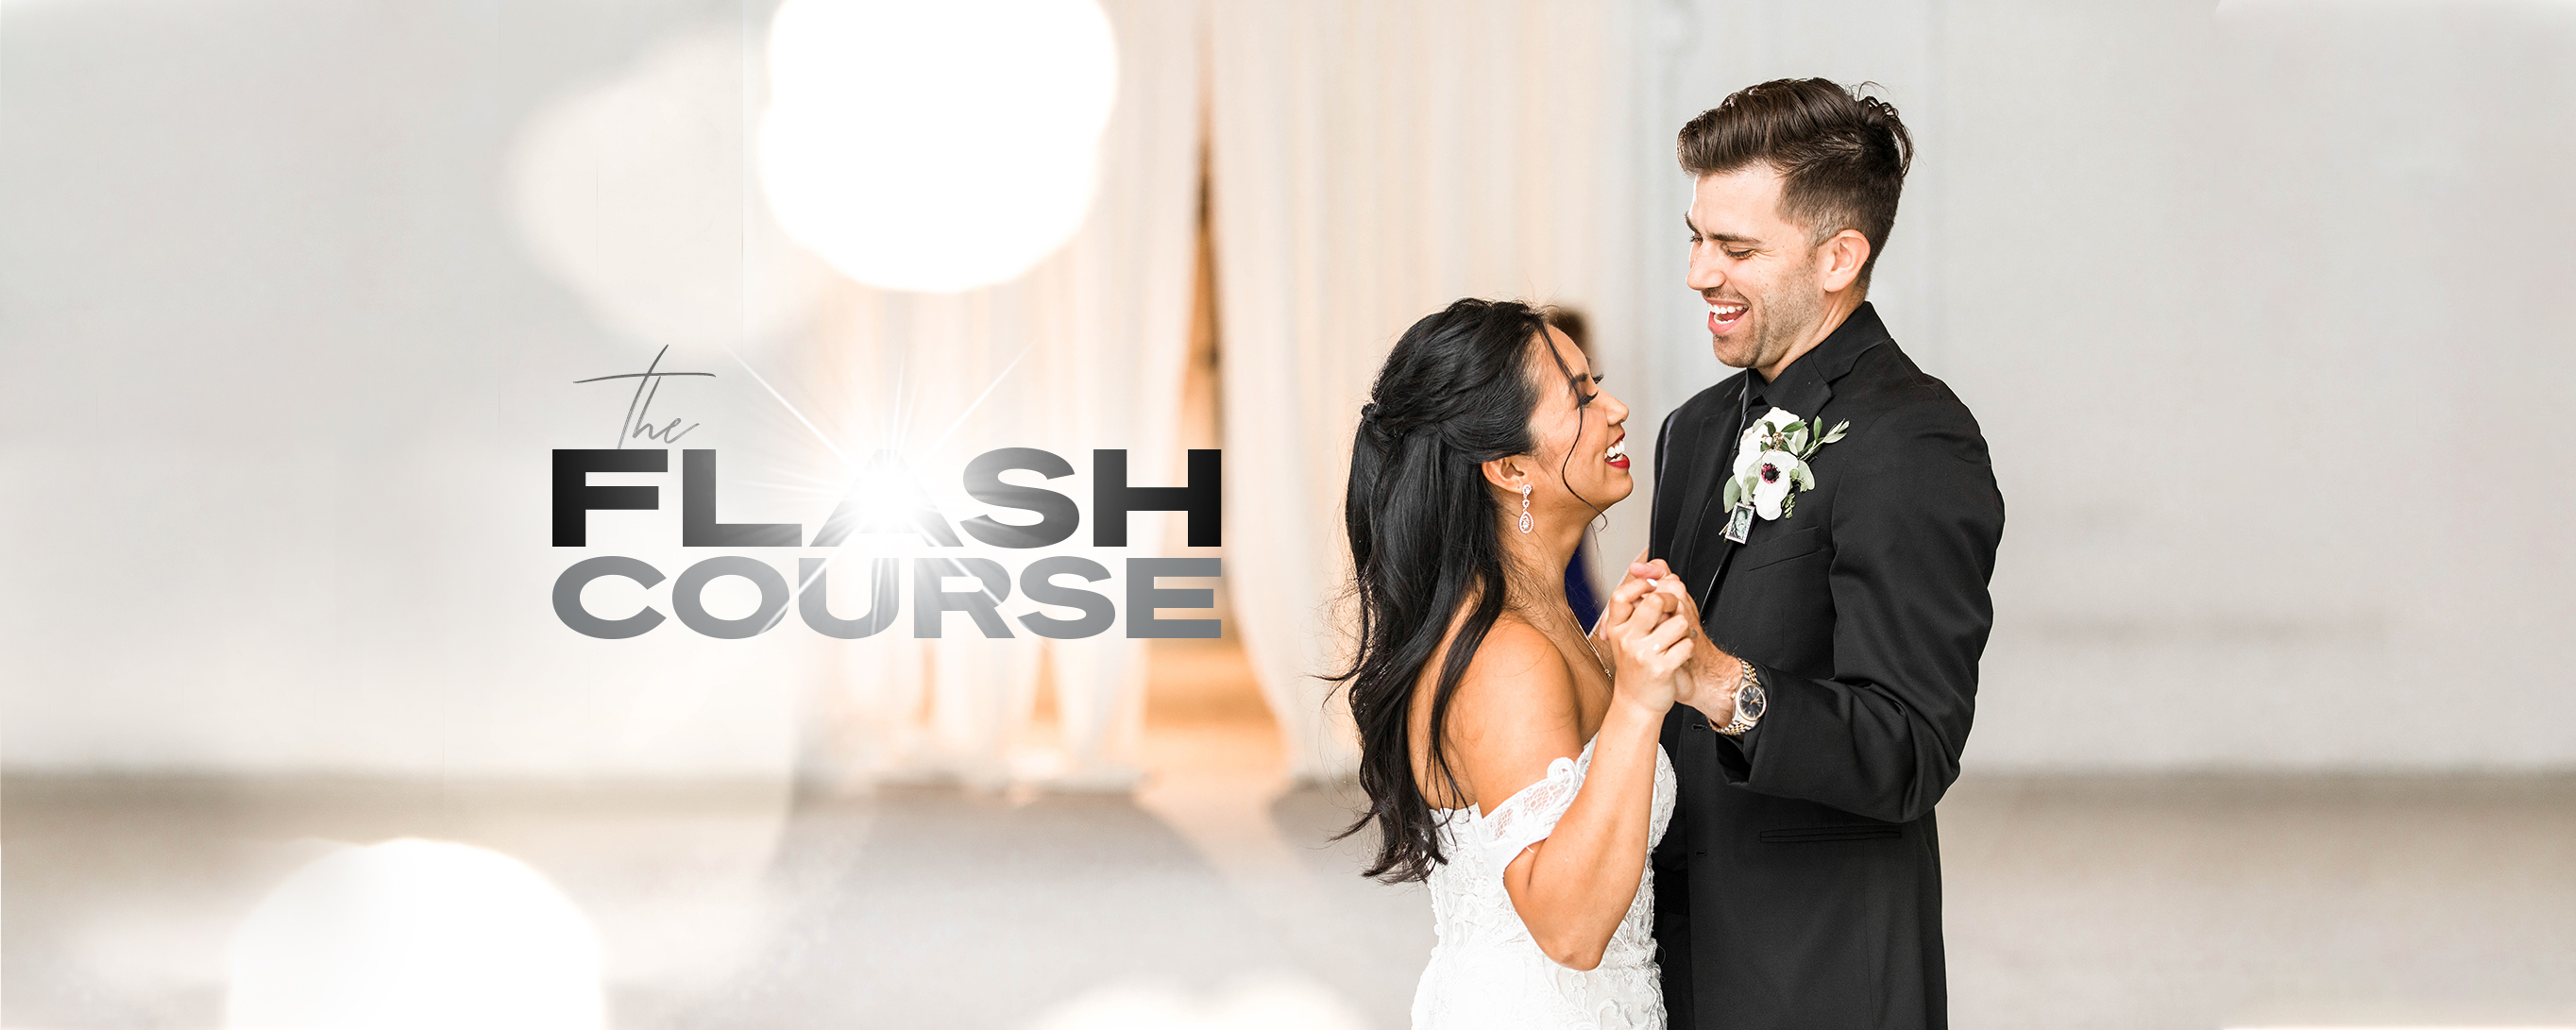 Wedding Flash Course